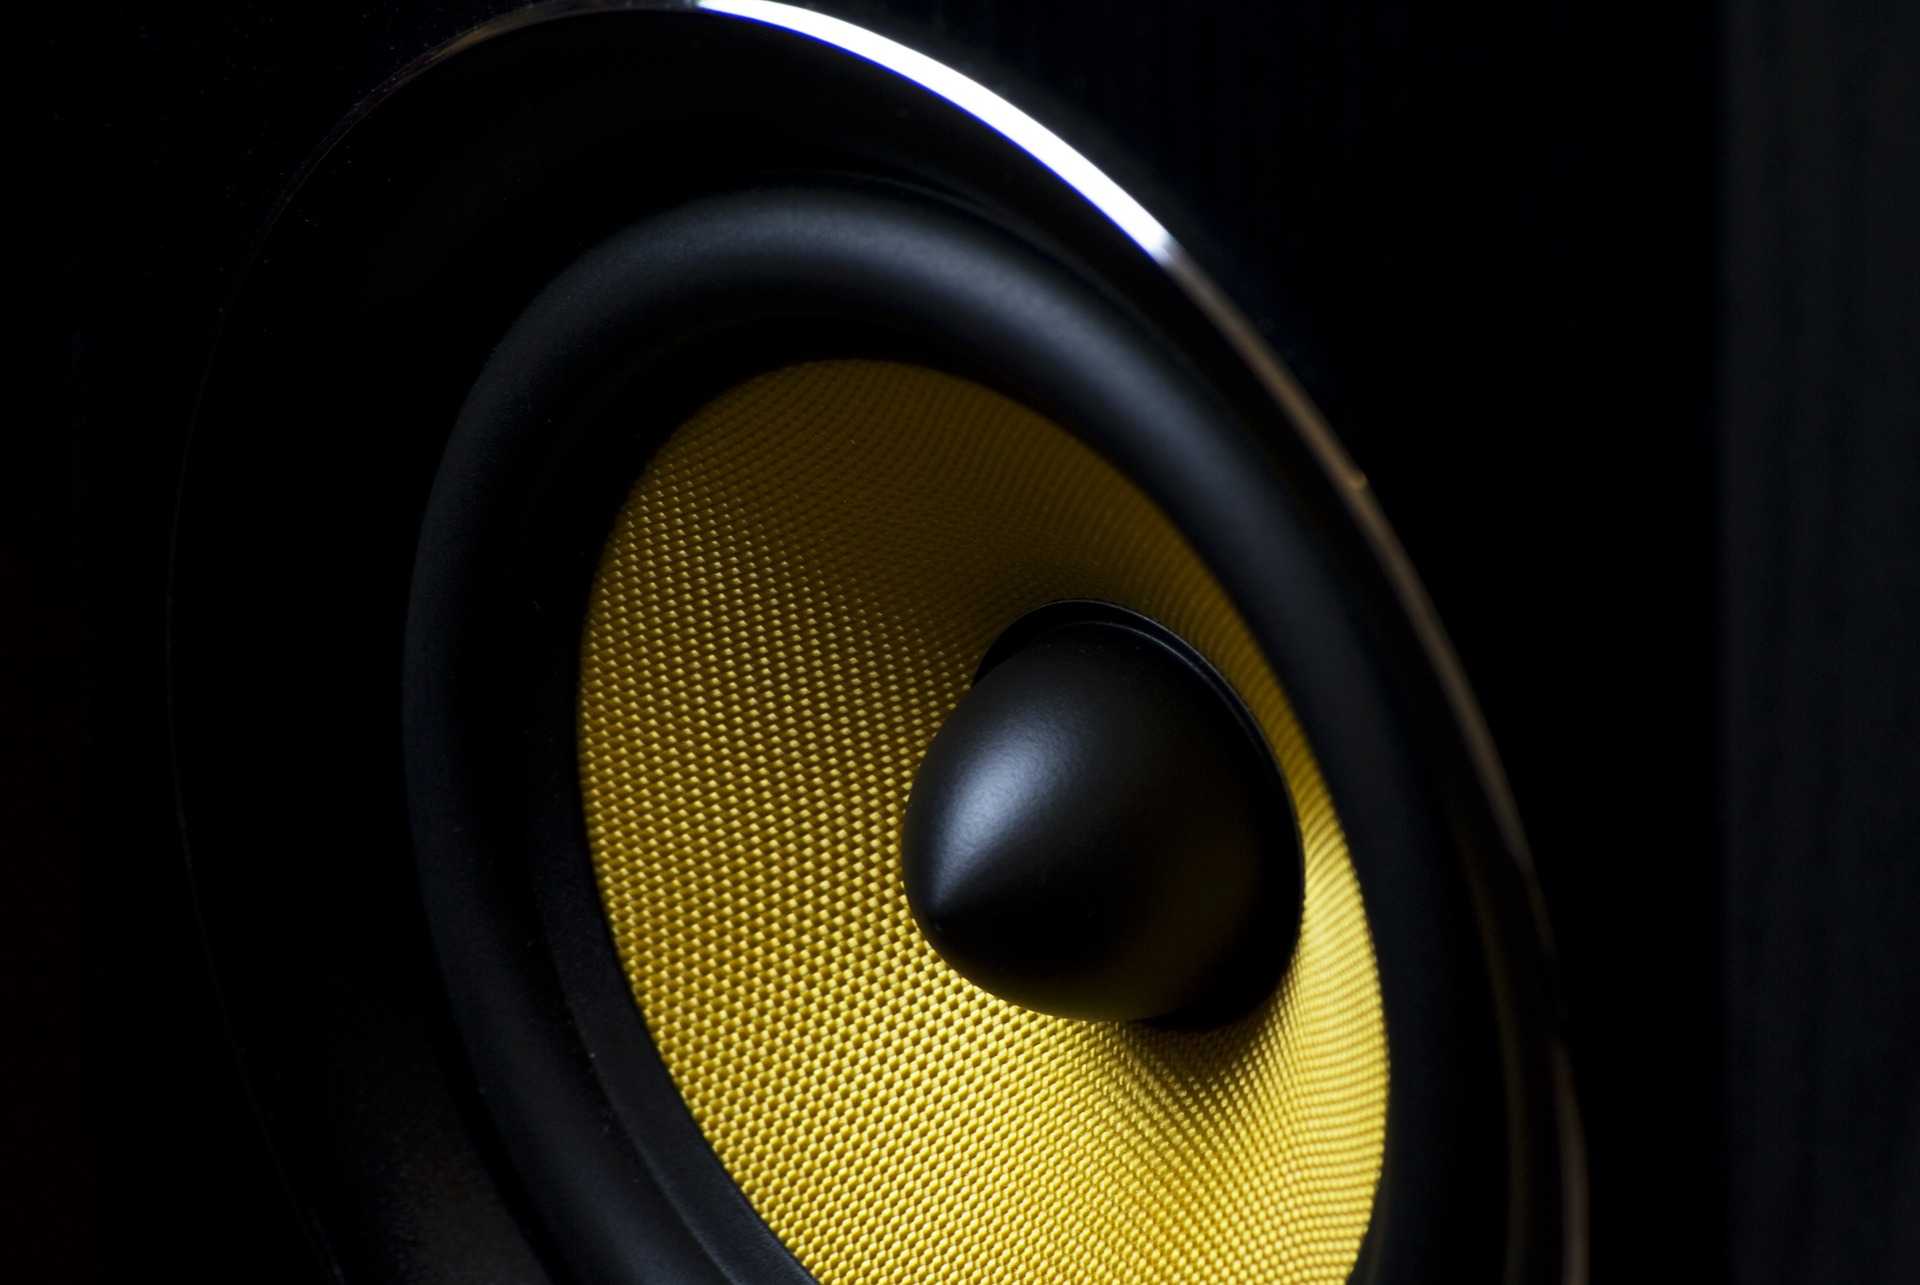 loud speaker causing noise pollution